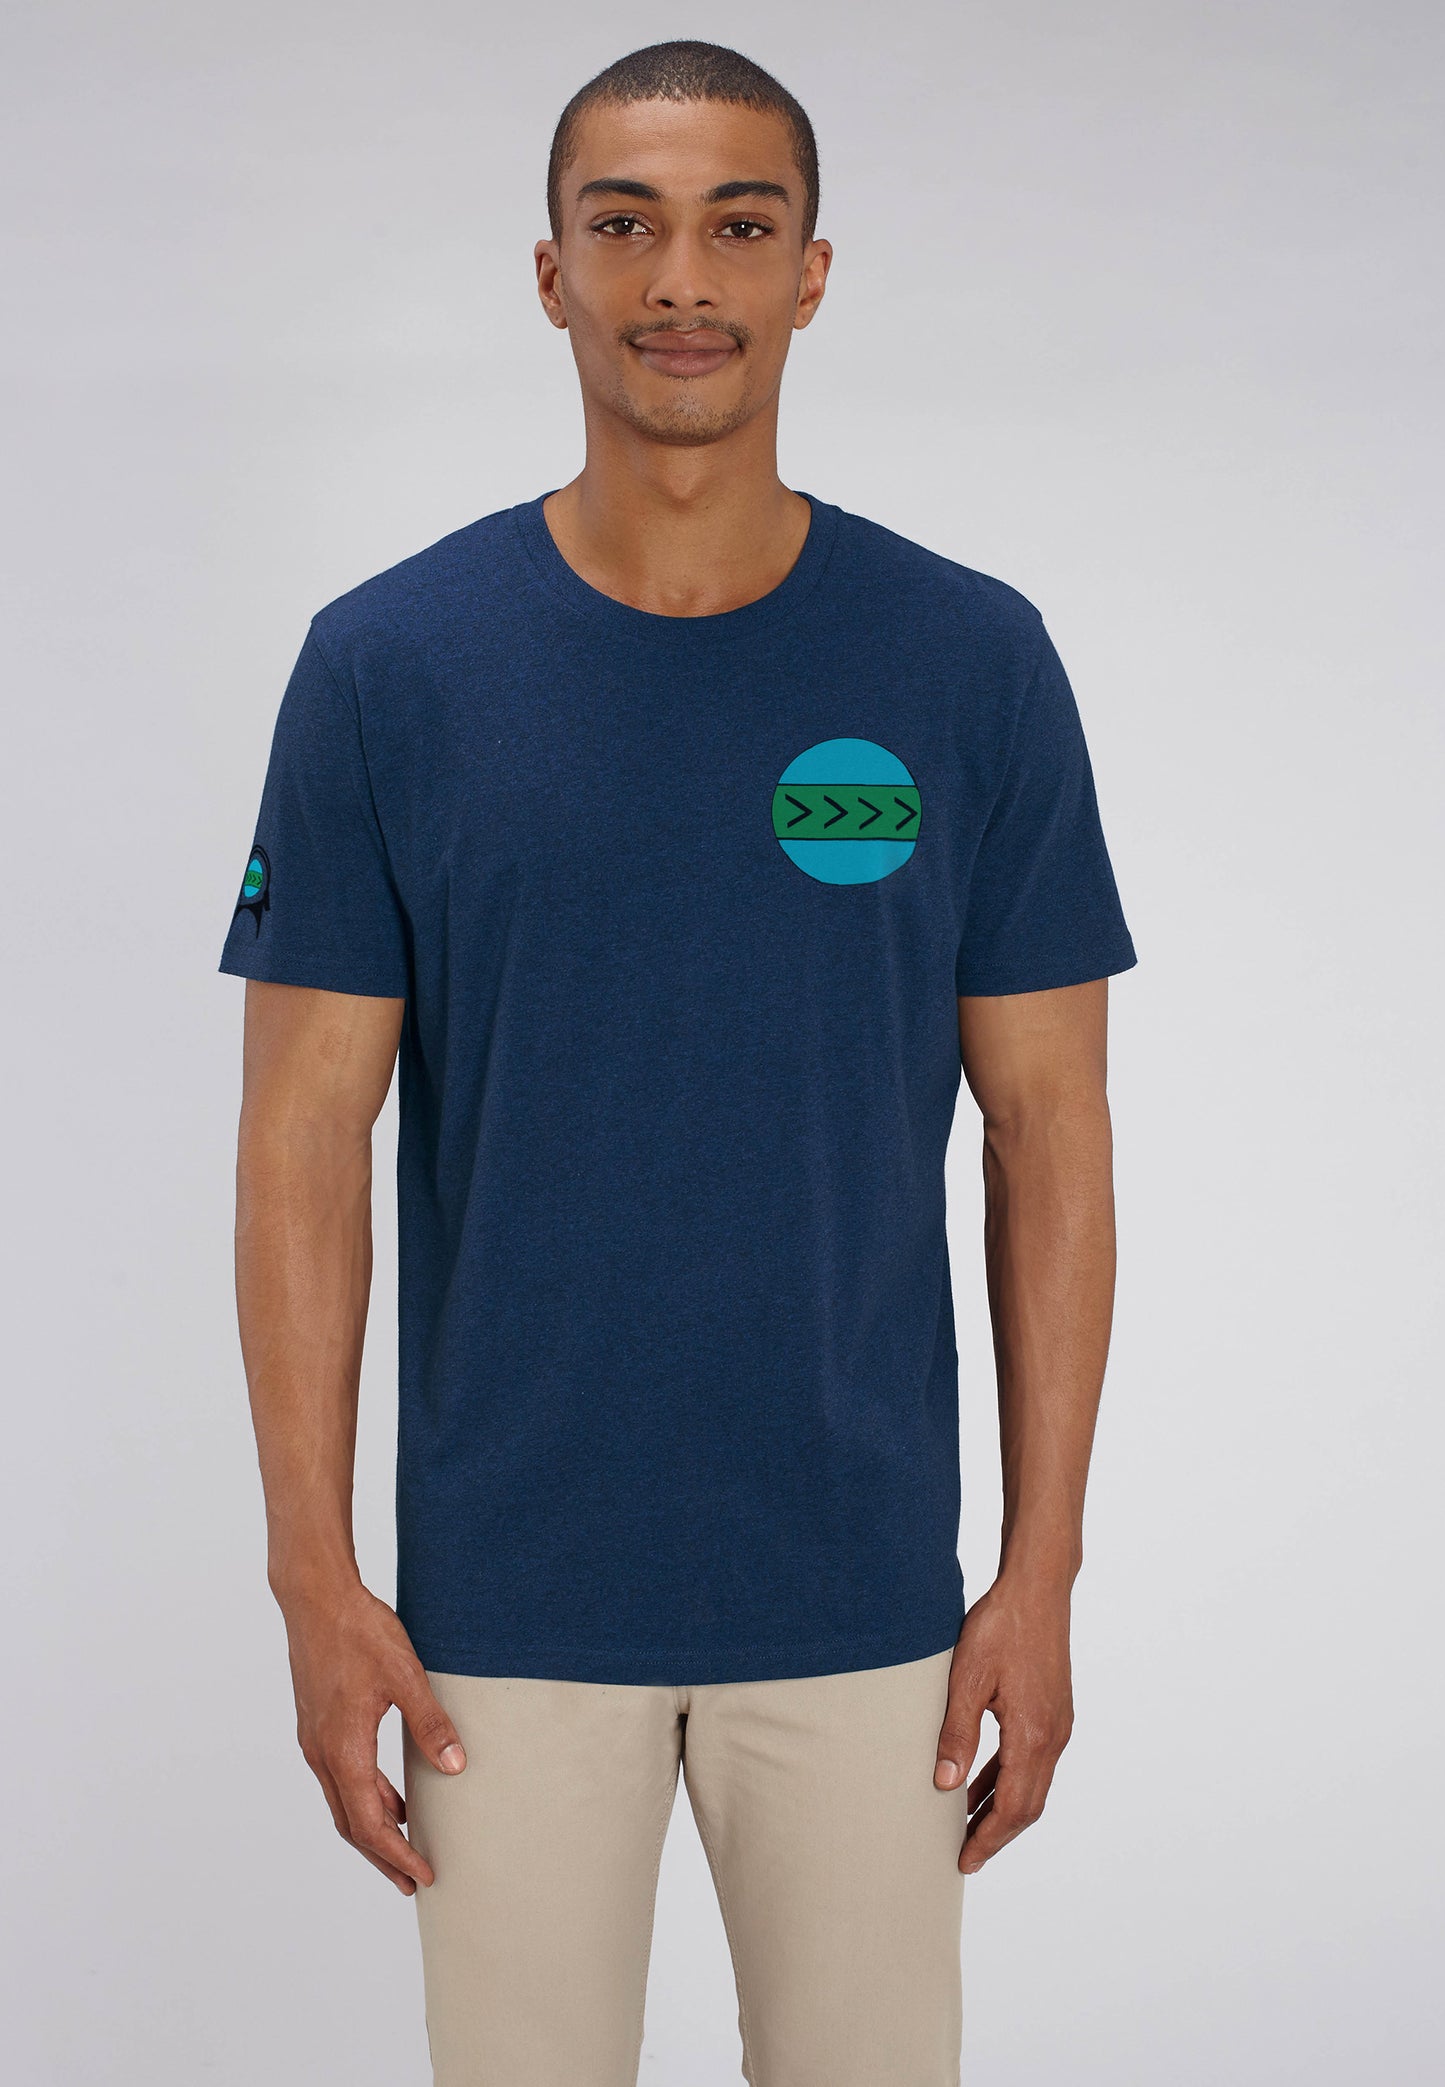 CAPRA-EARTH Unisex T-shirt , Vegan T-shirt in White Cotton Jersey